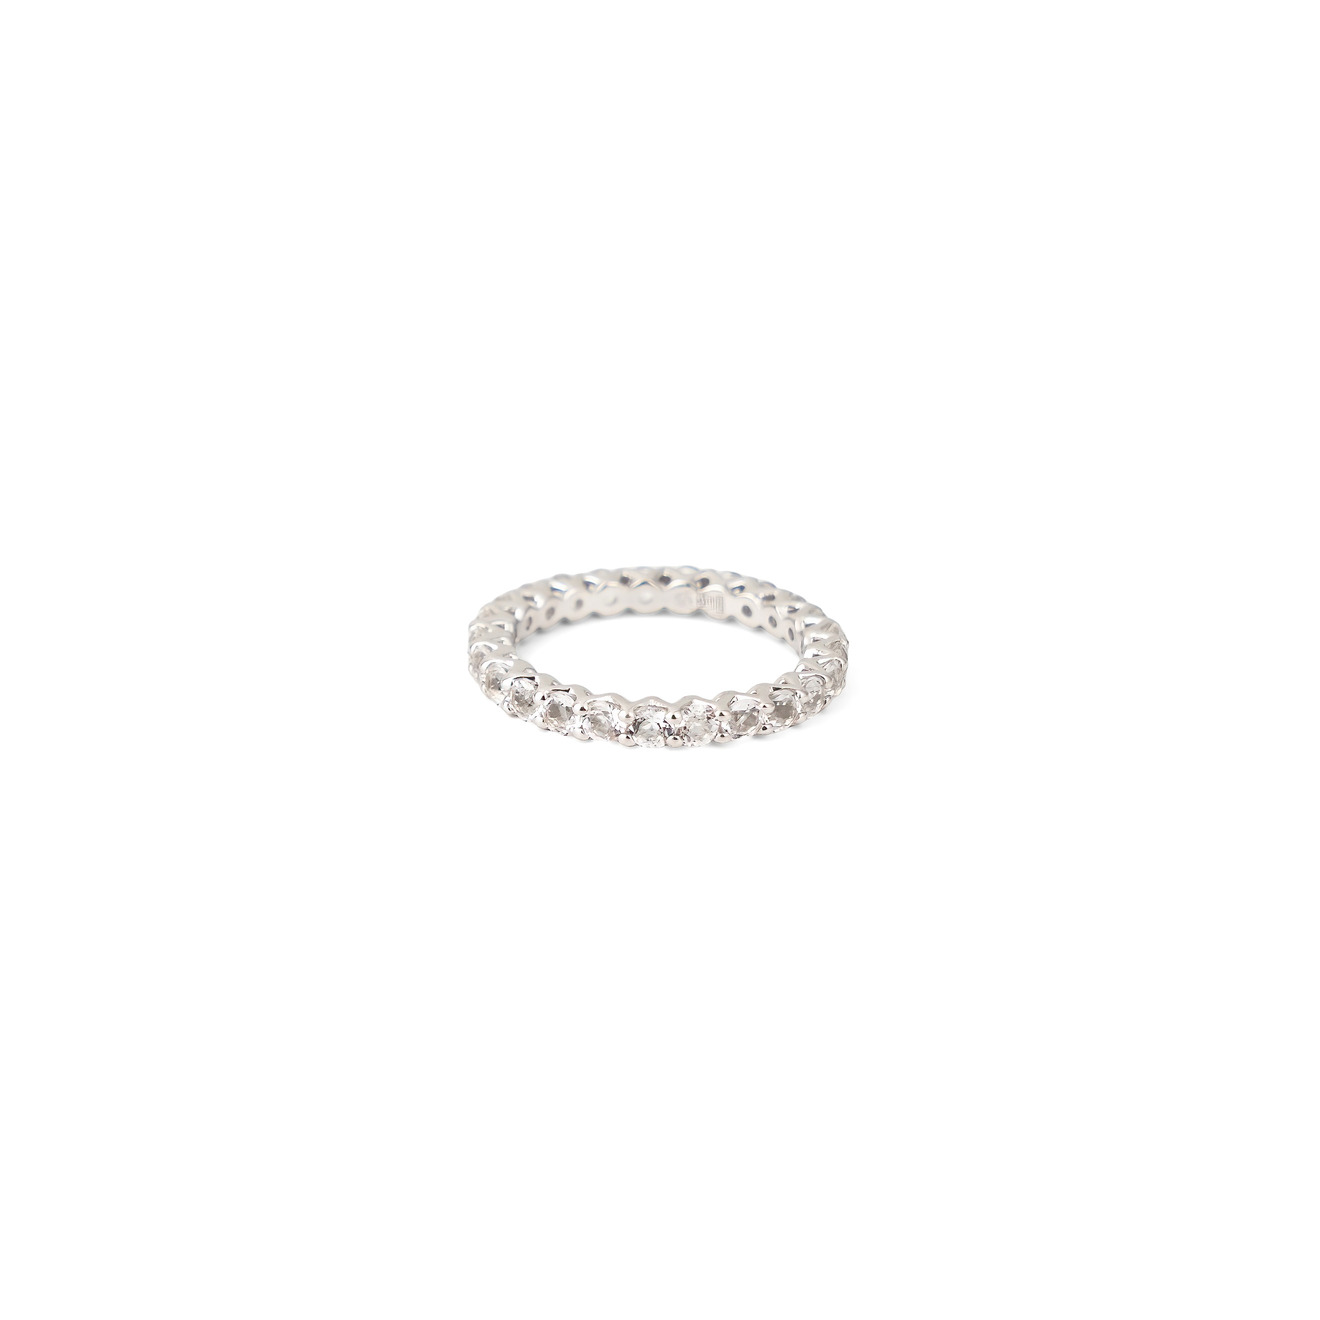 EKA KOMA Сверкающее кольцо eka koma сверкающее кольцо из серебра с хризолитами